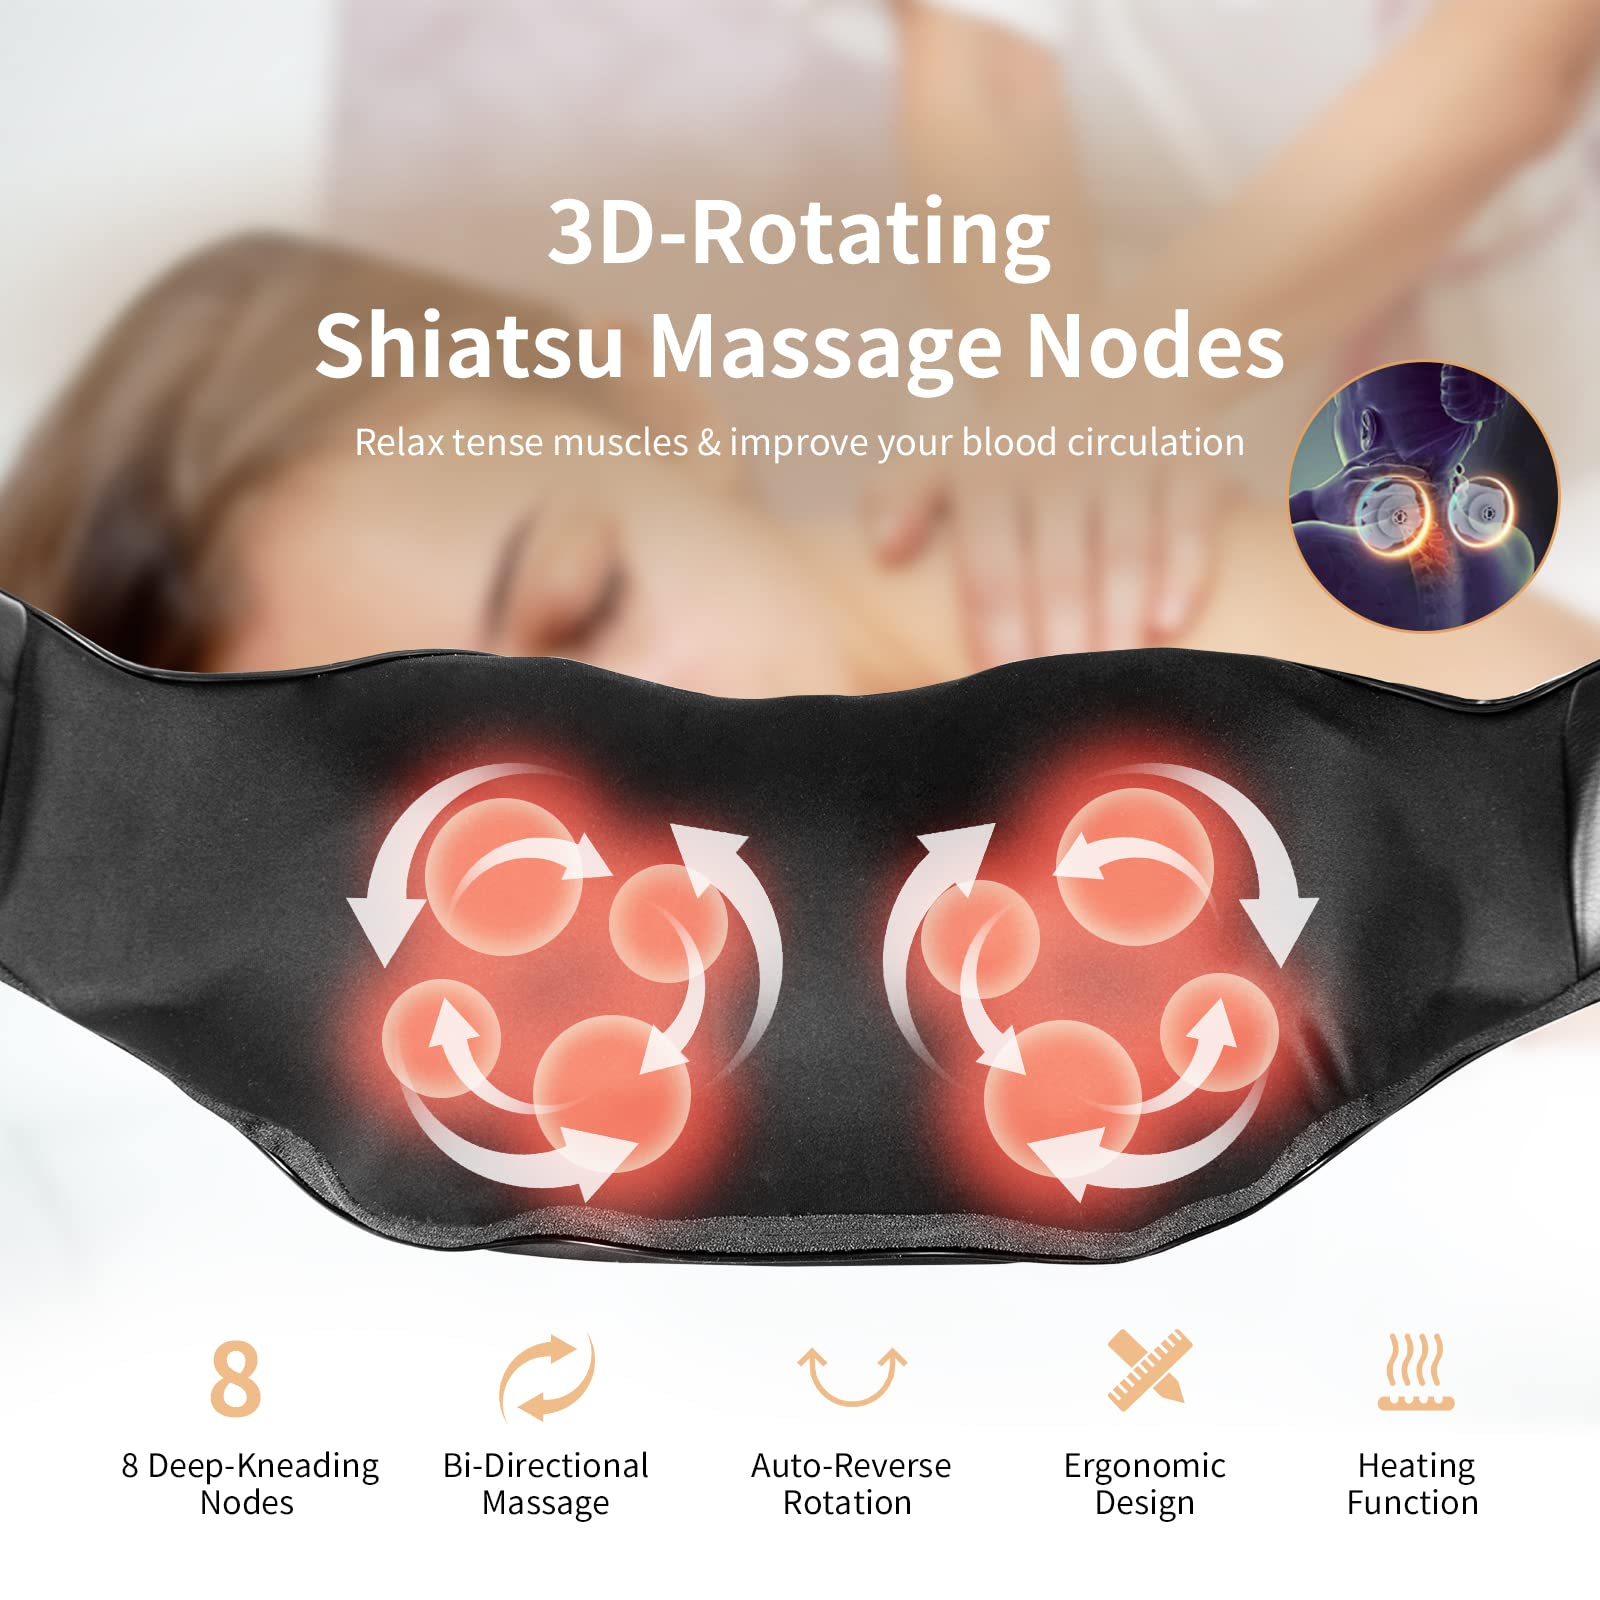 Giantex Shiatsu Neck Back and Shoulder Massager w/Heat, Deep Tissue 3D Kneading Massage Pillow for Back